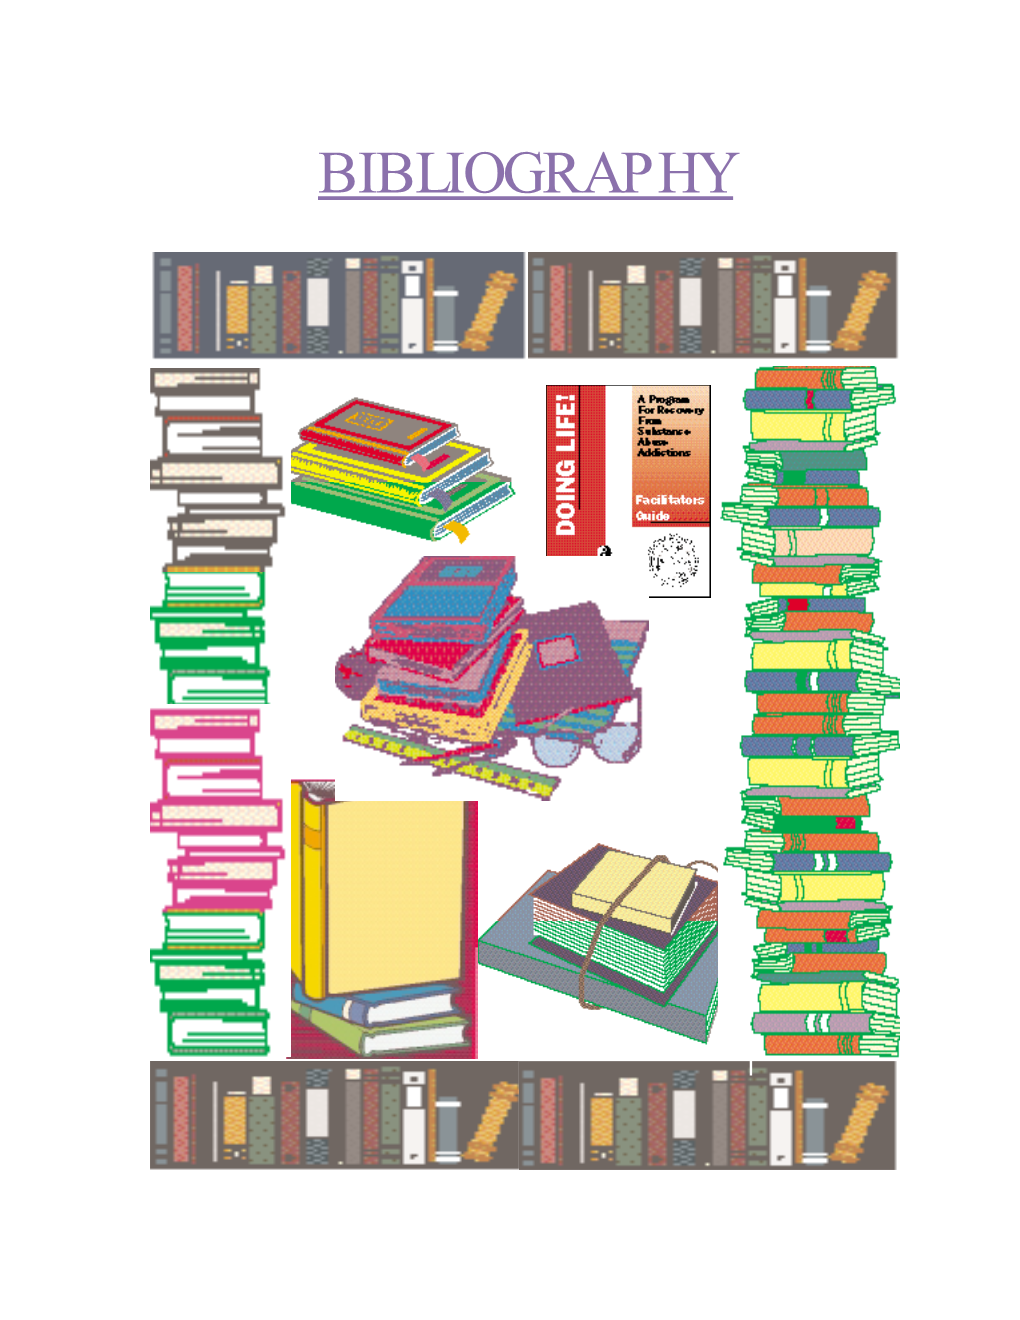 BIBLIOGRAPHY 12° of Freedom Bibliography